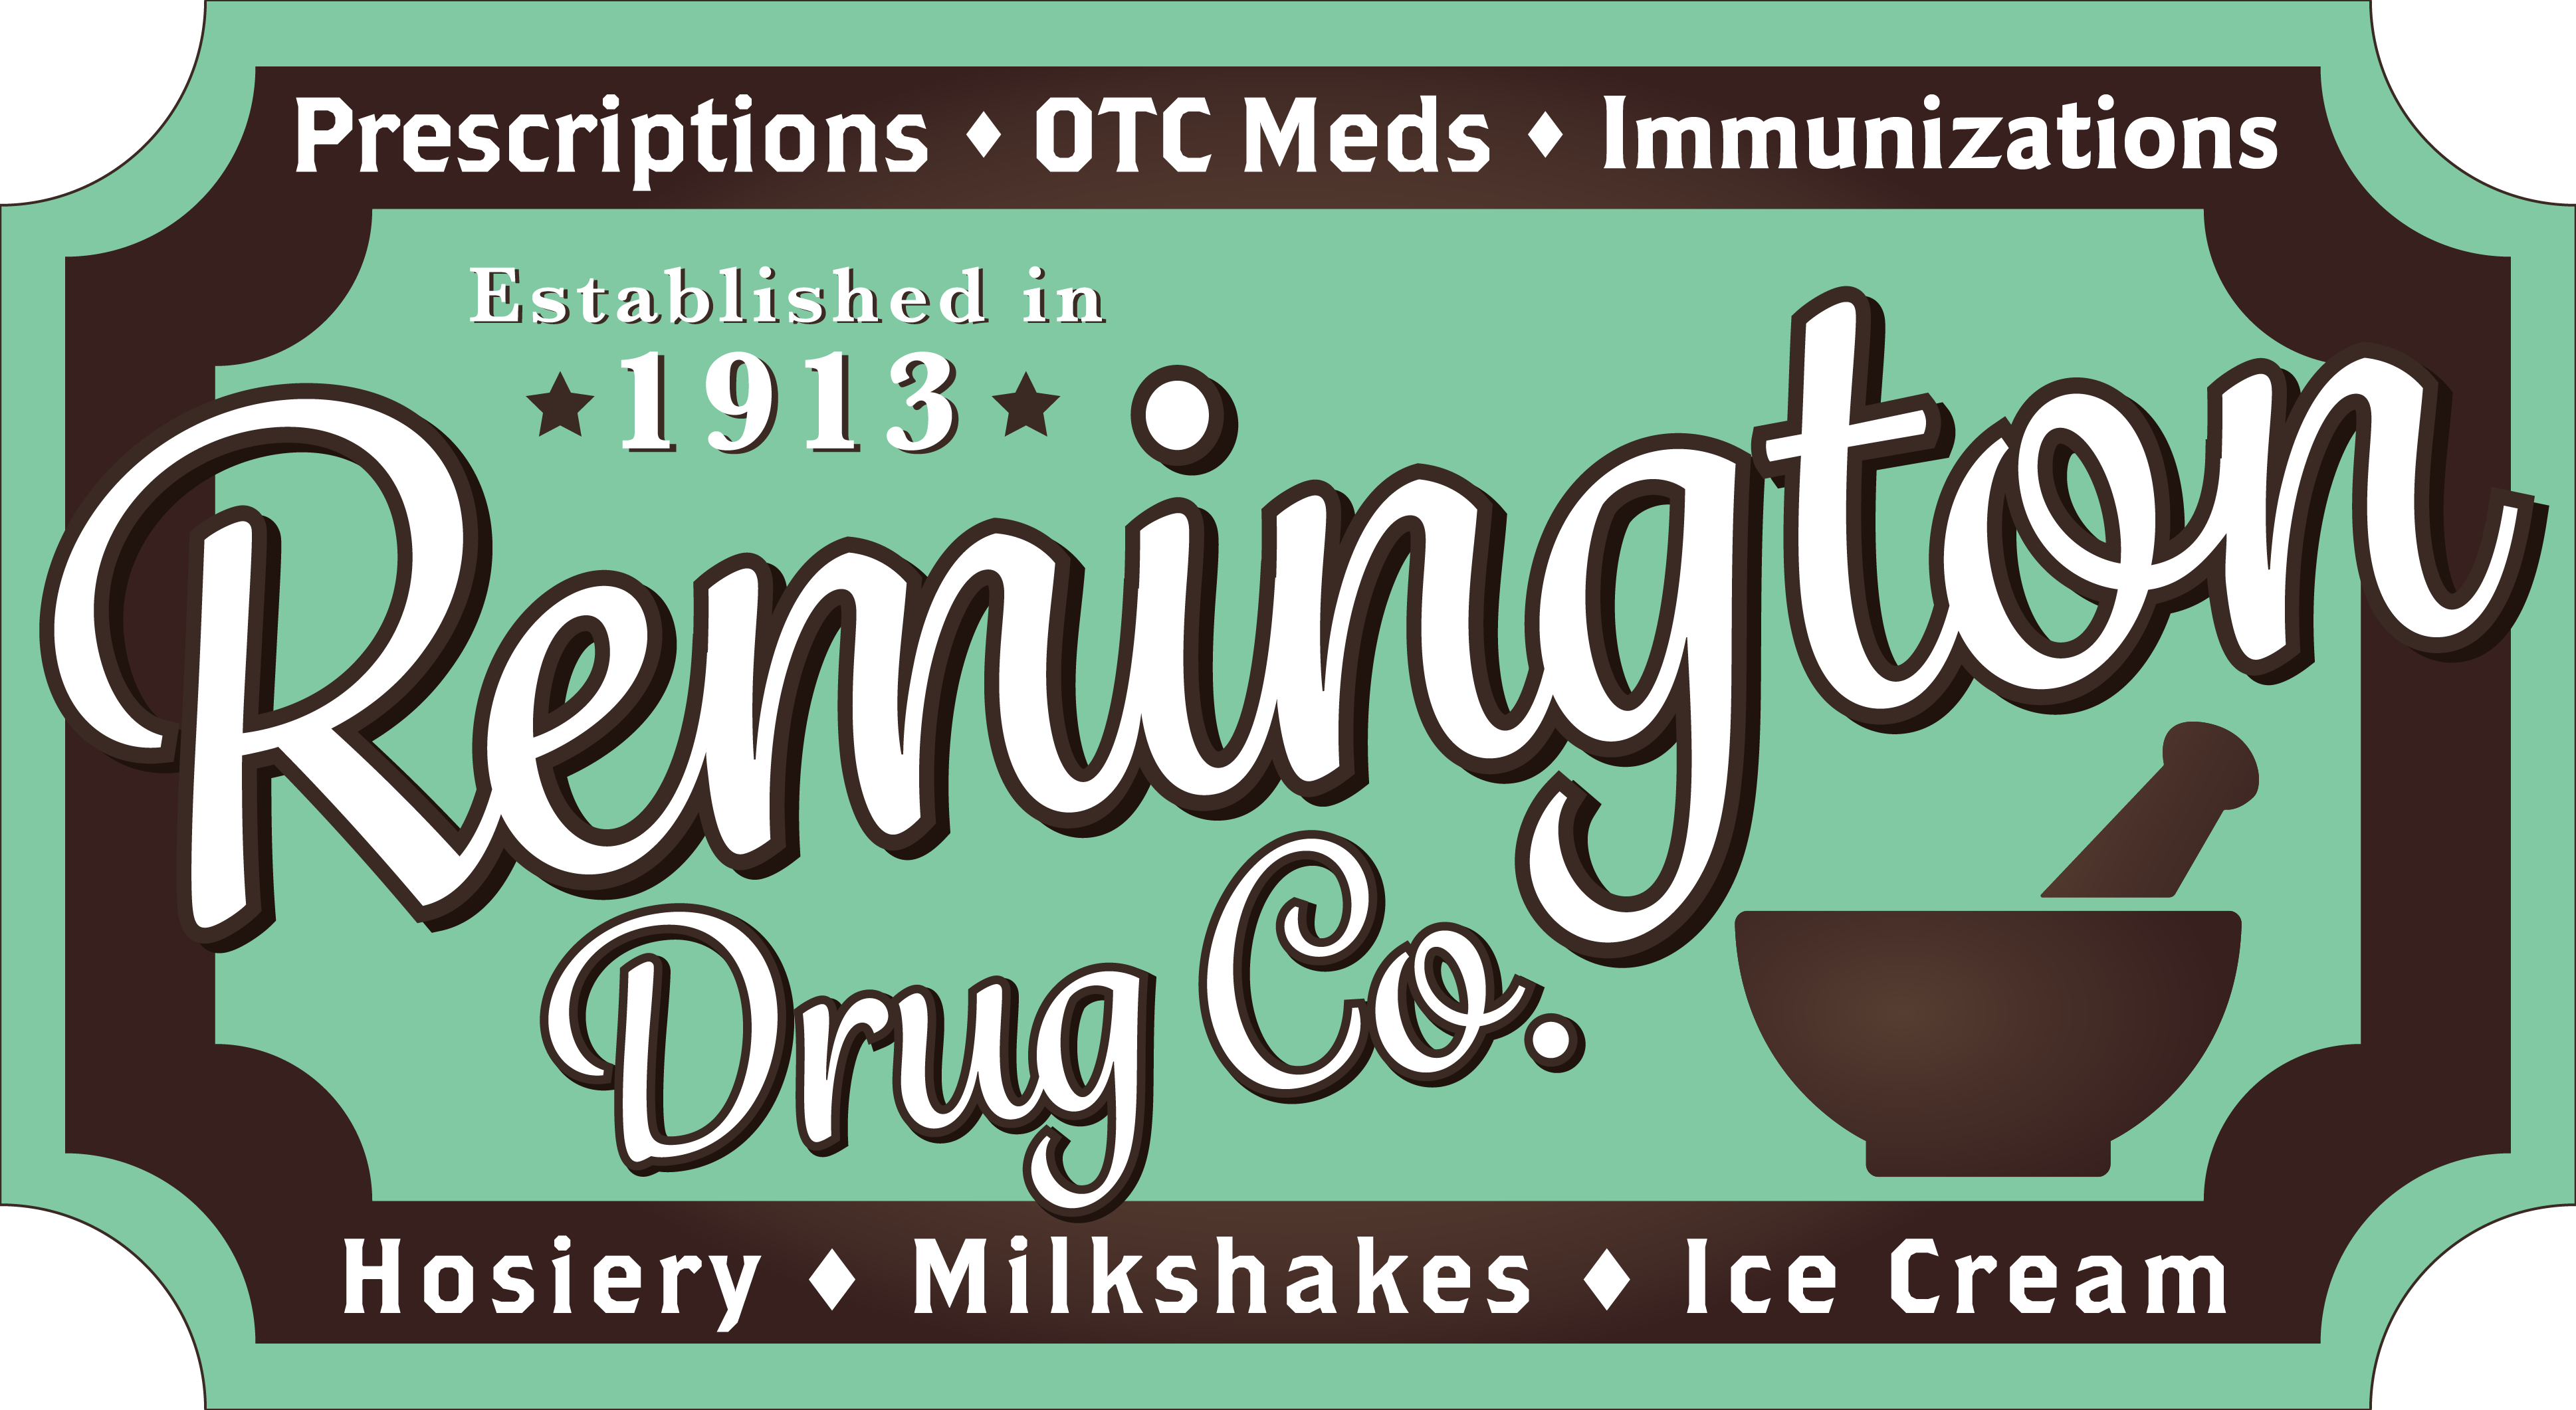 Remington Drug Co.